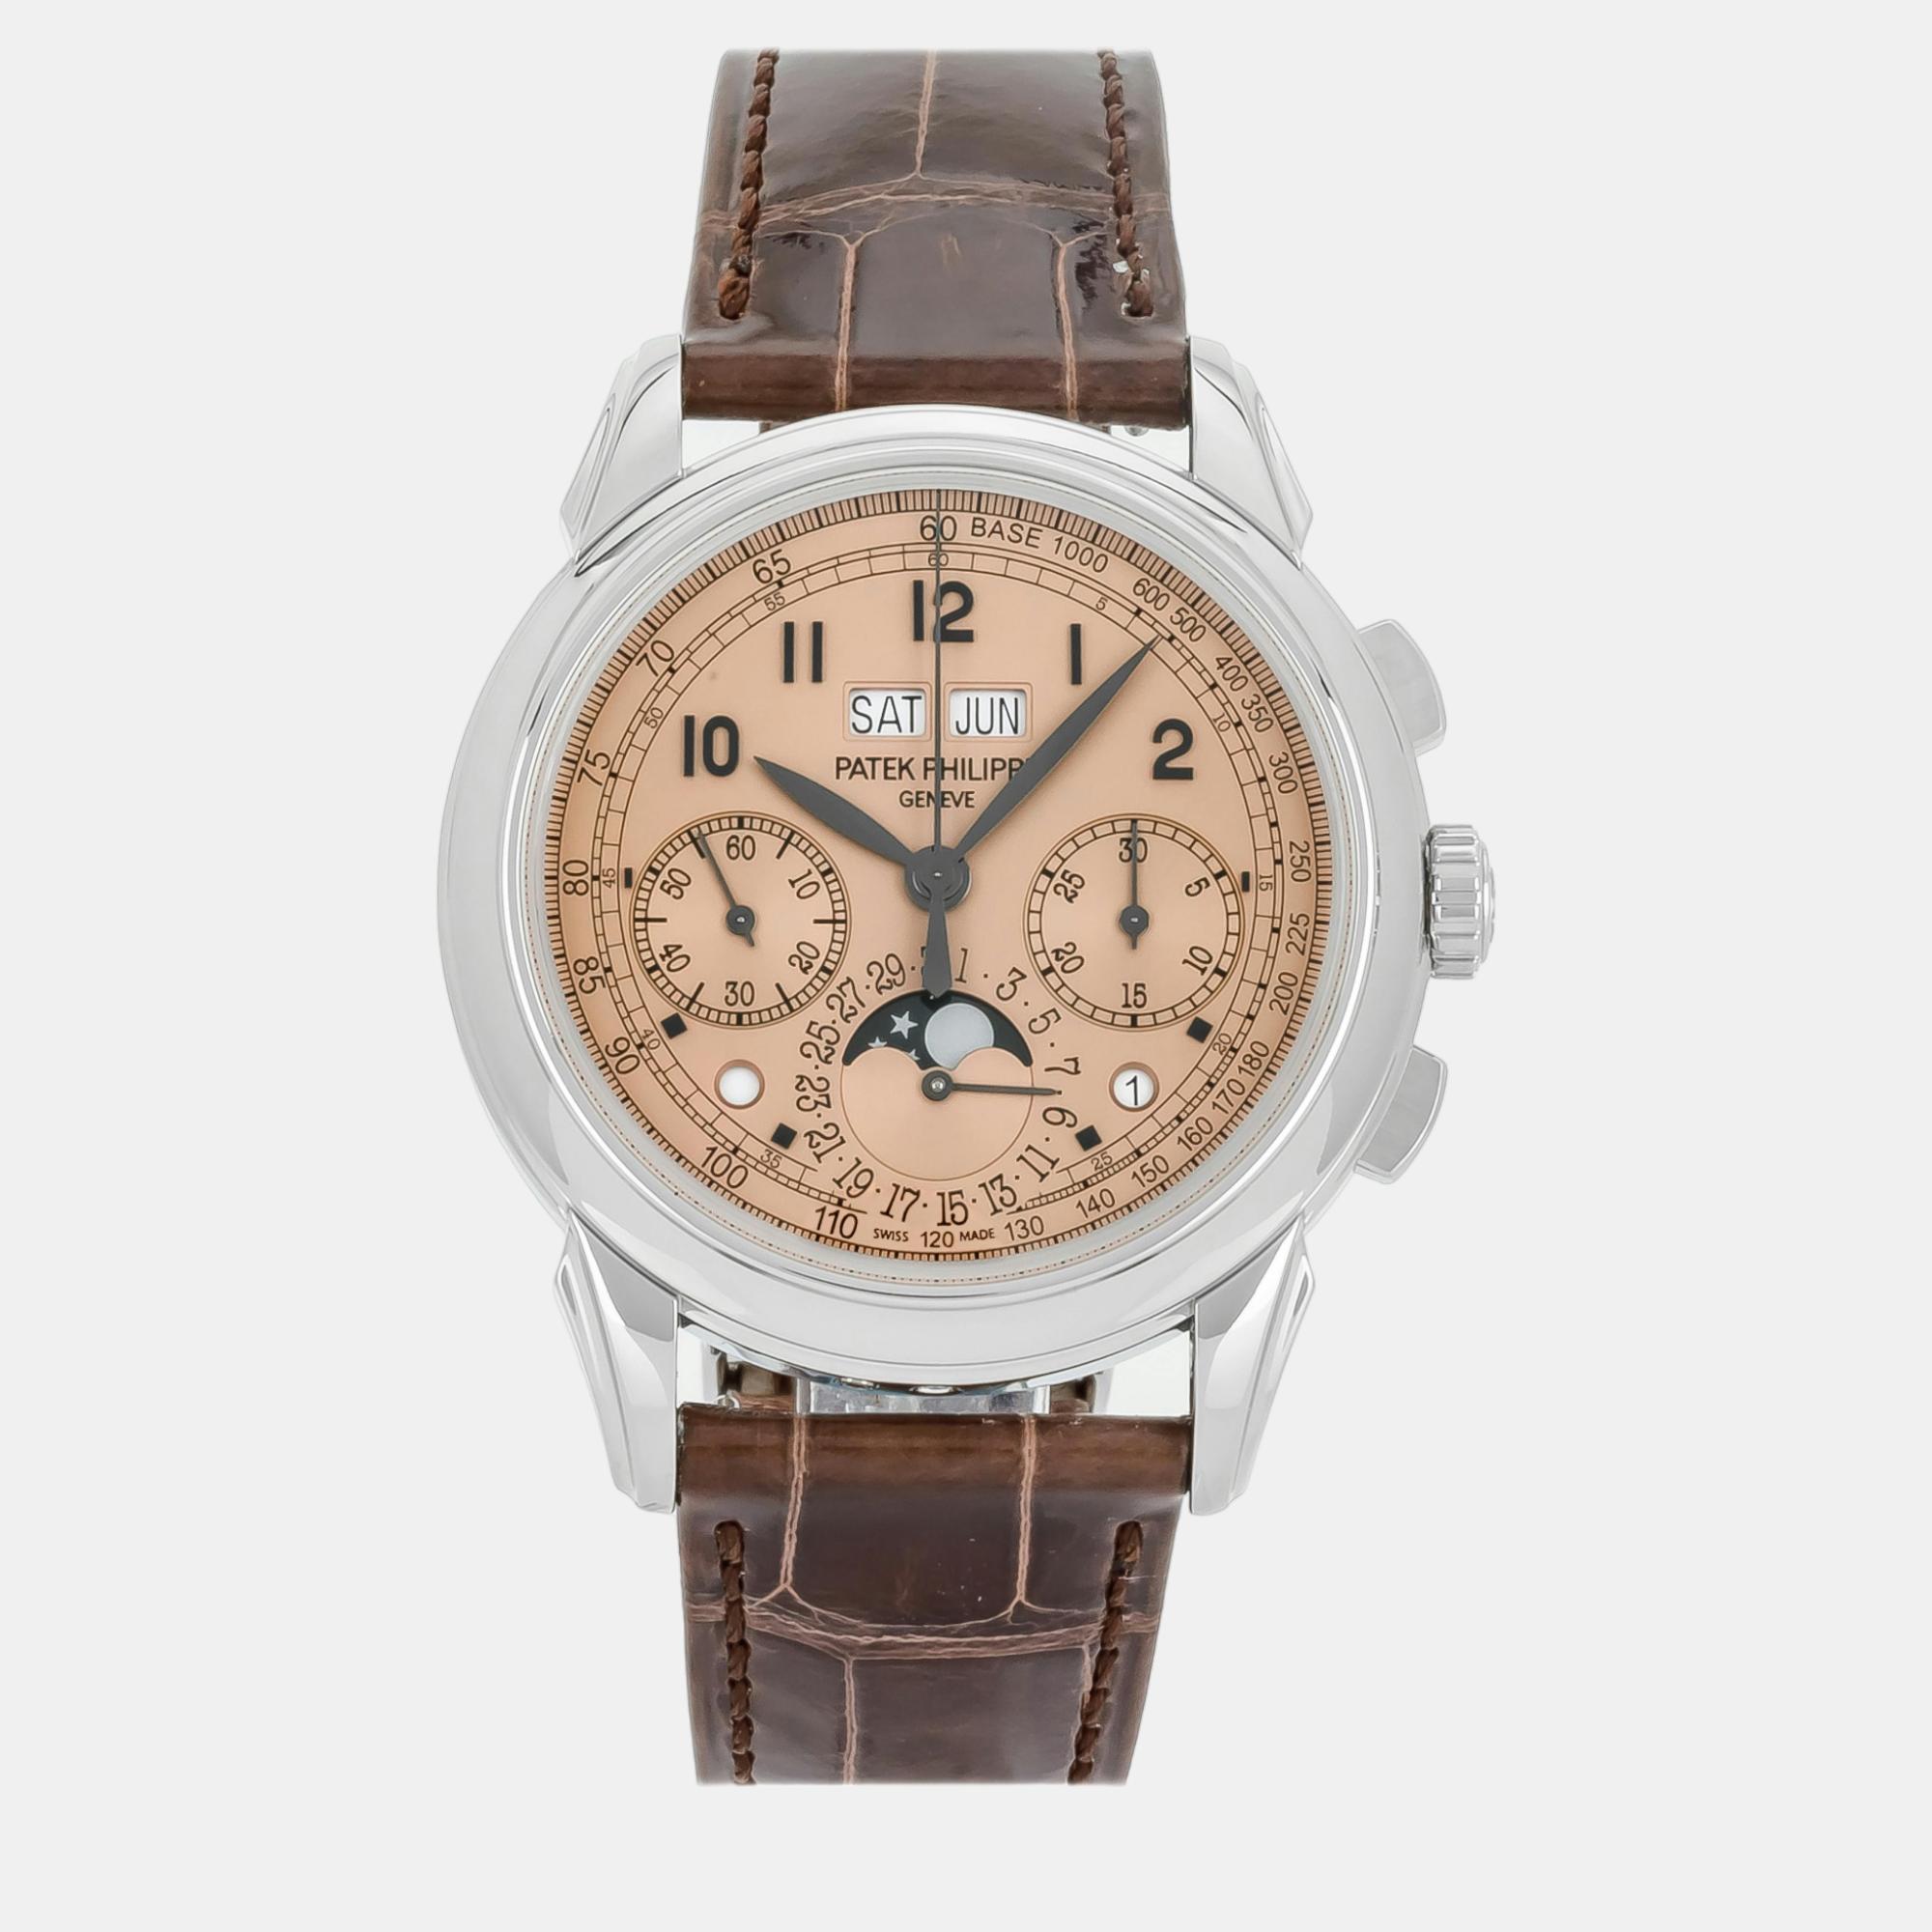 Patek philippe salmon platinum grand complications manual winding men's wristwatch 41 mm